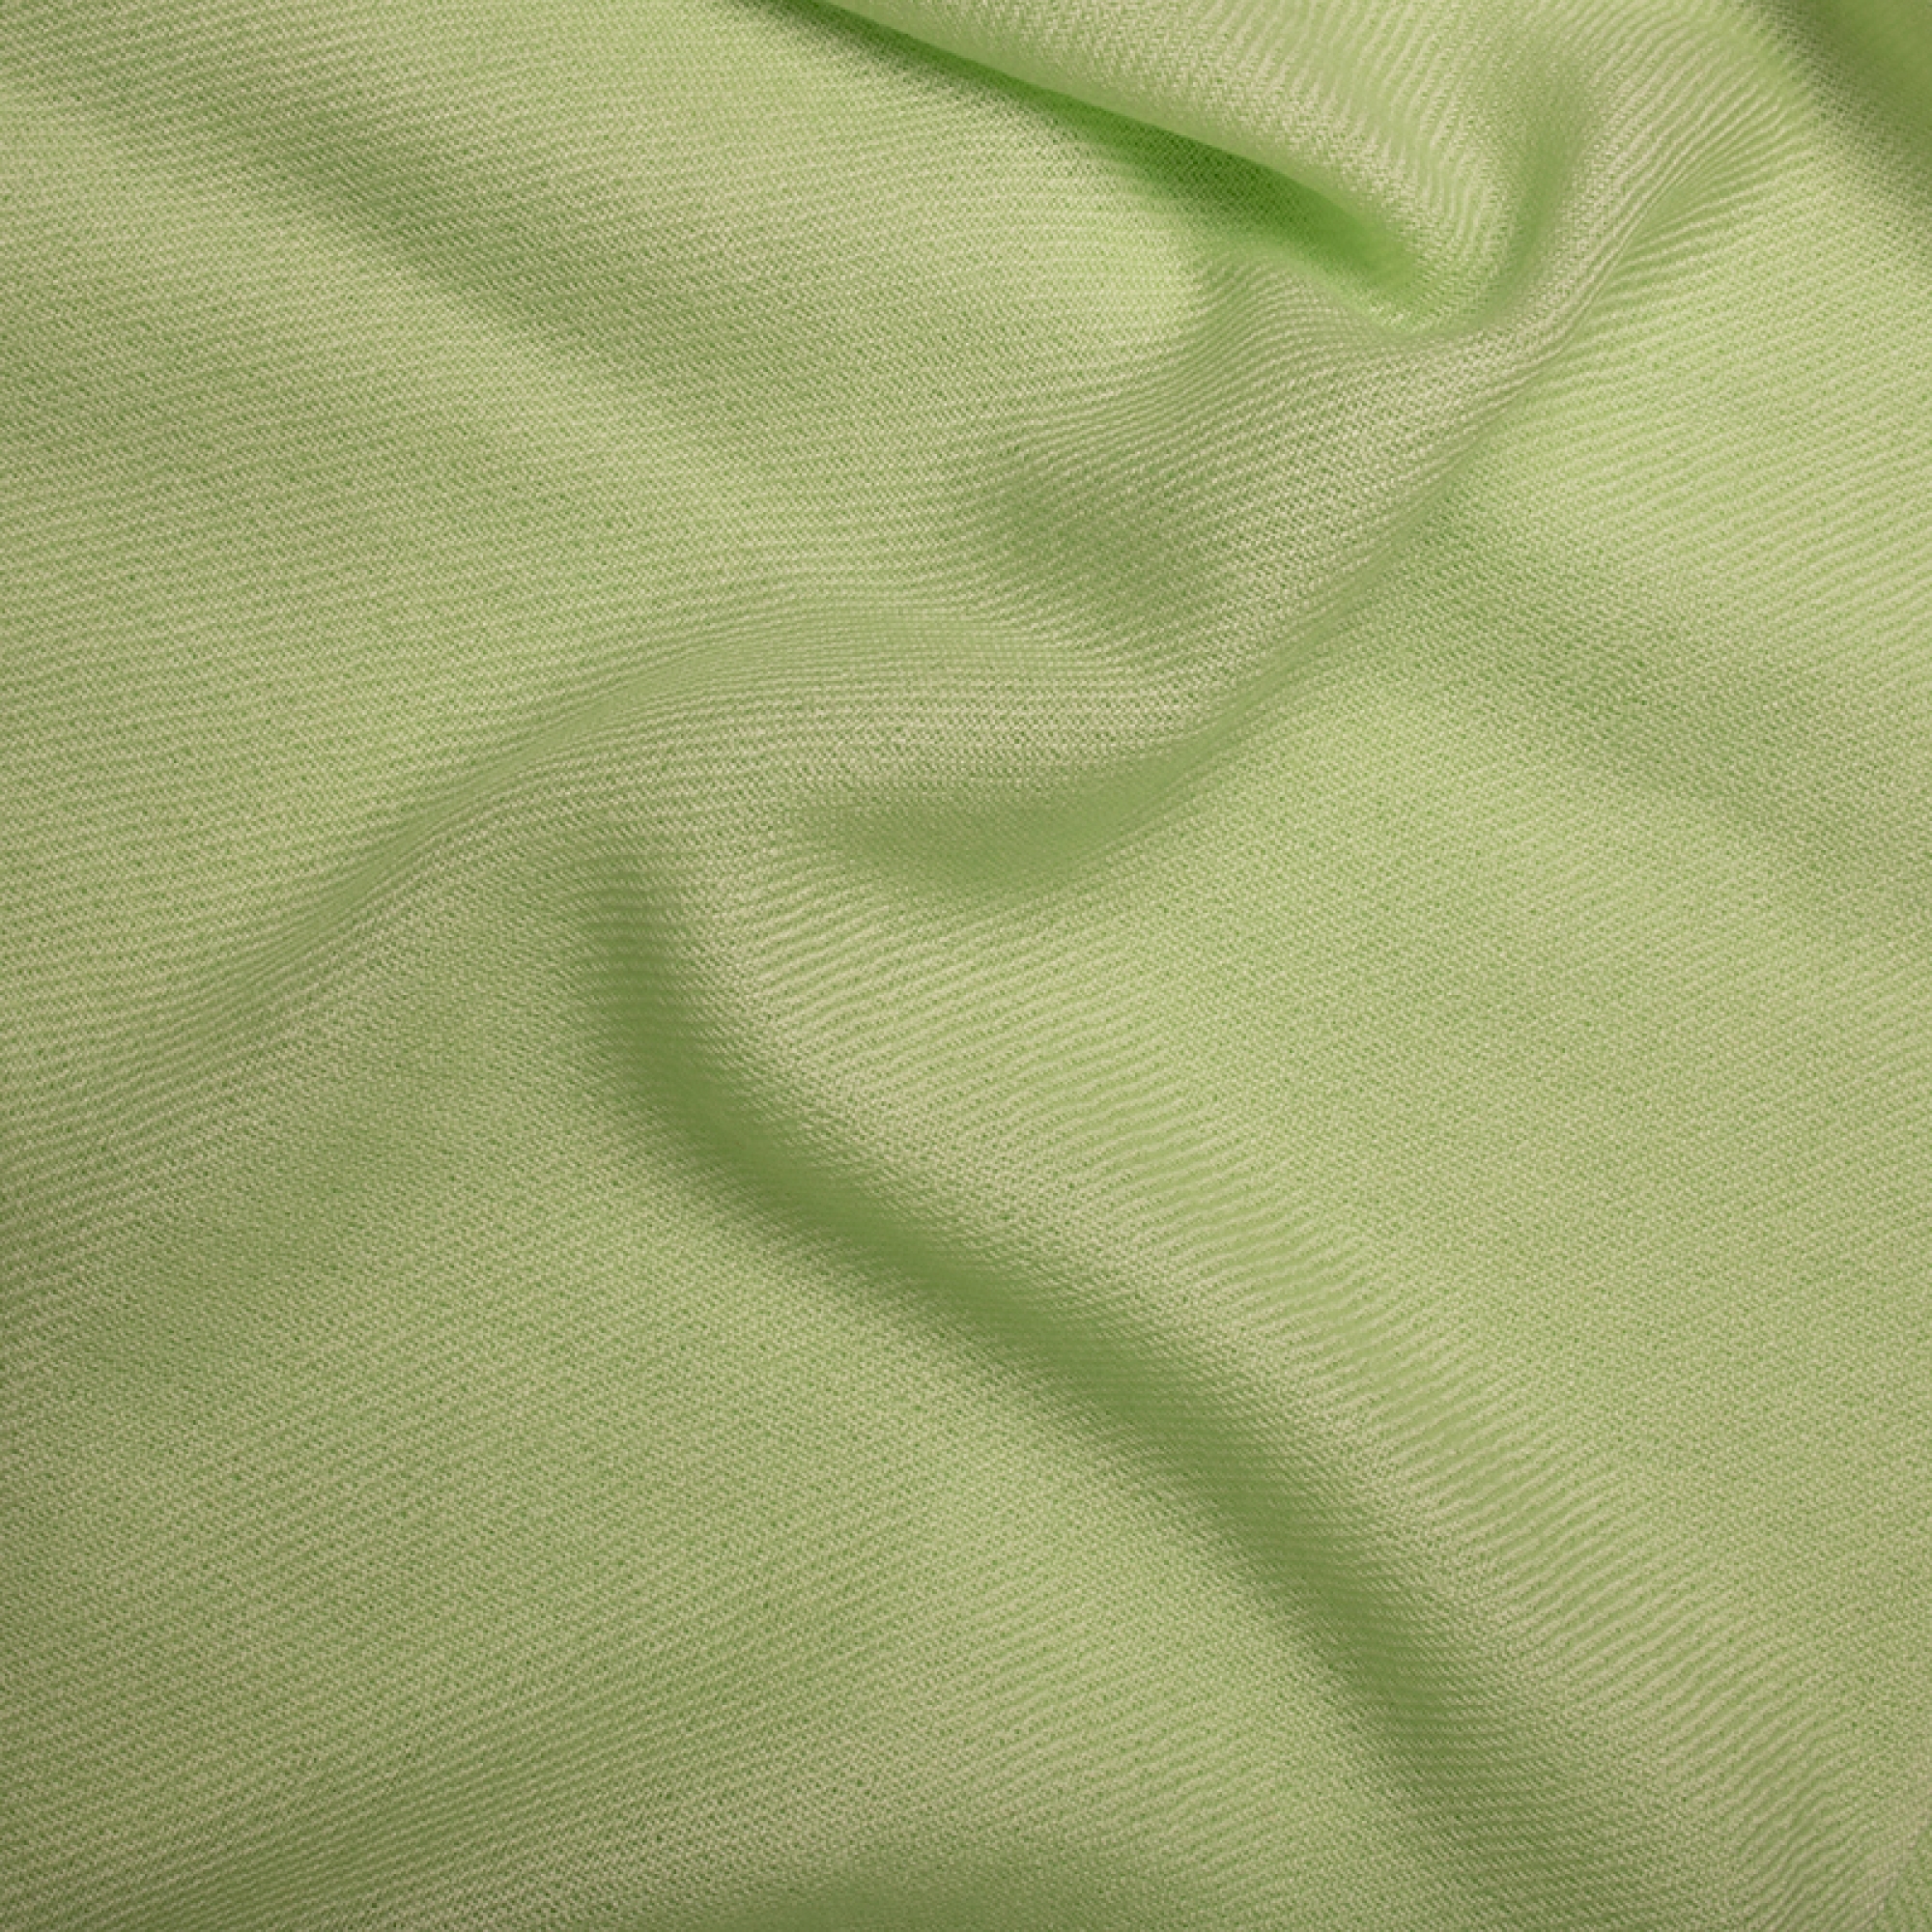 Cashmere accessories blanket toodoo plain xl 240 x 260 lime green 240 x 260 cm